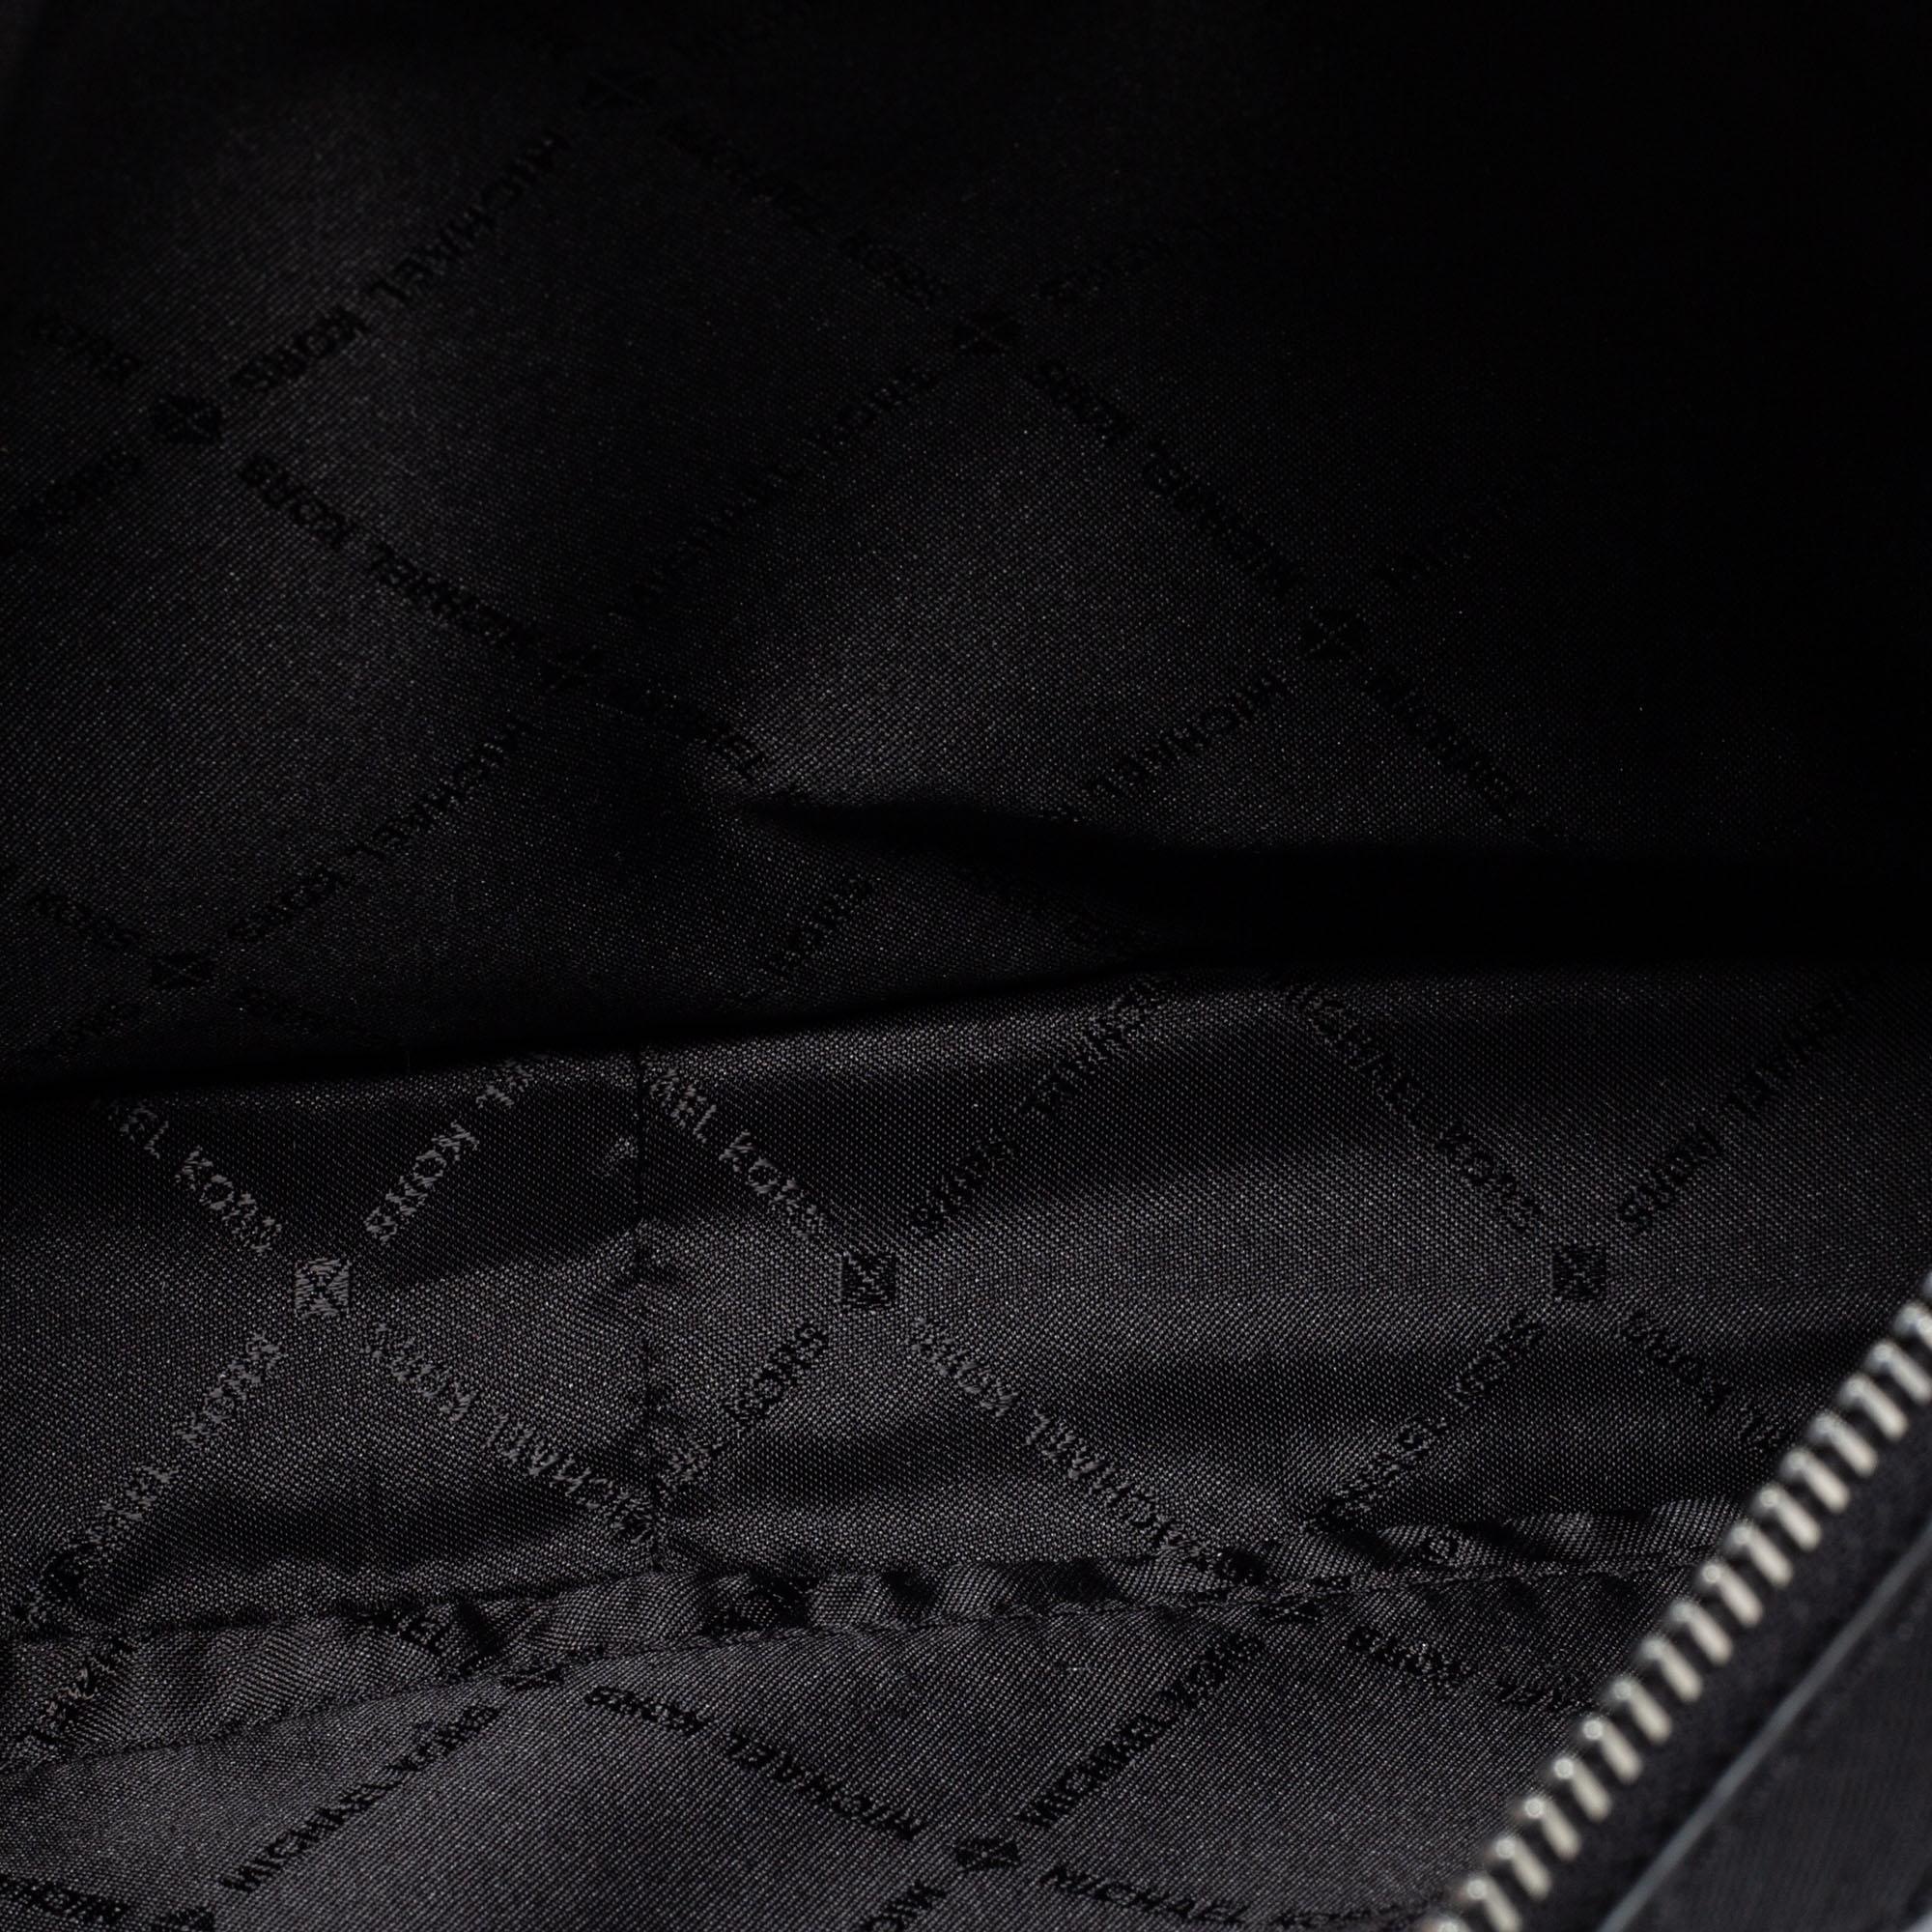 Michael Kors Black/Grey Signature Coated Canvas Leather Jet Set Crossbody Bag 6